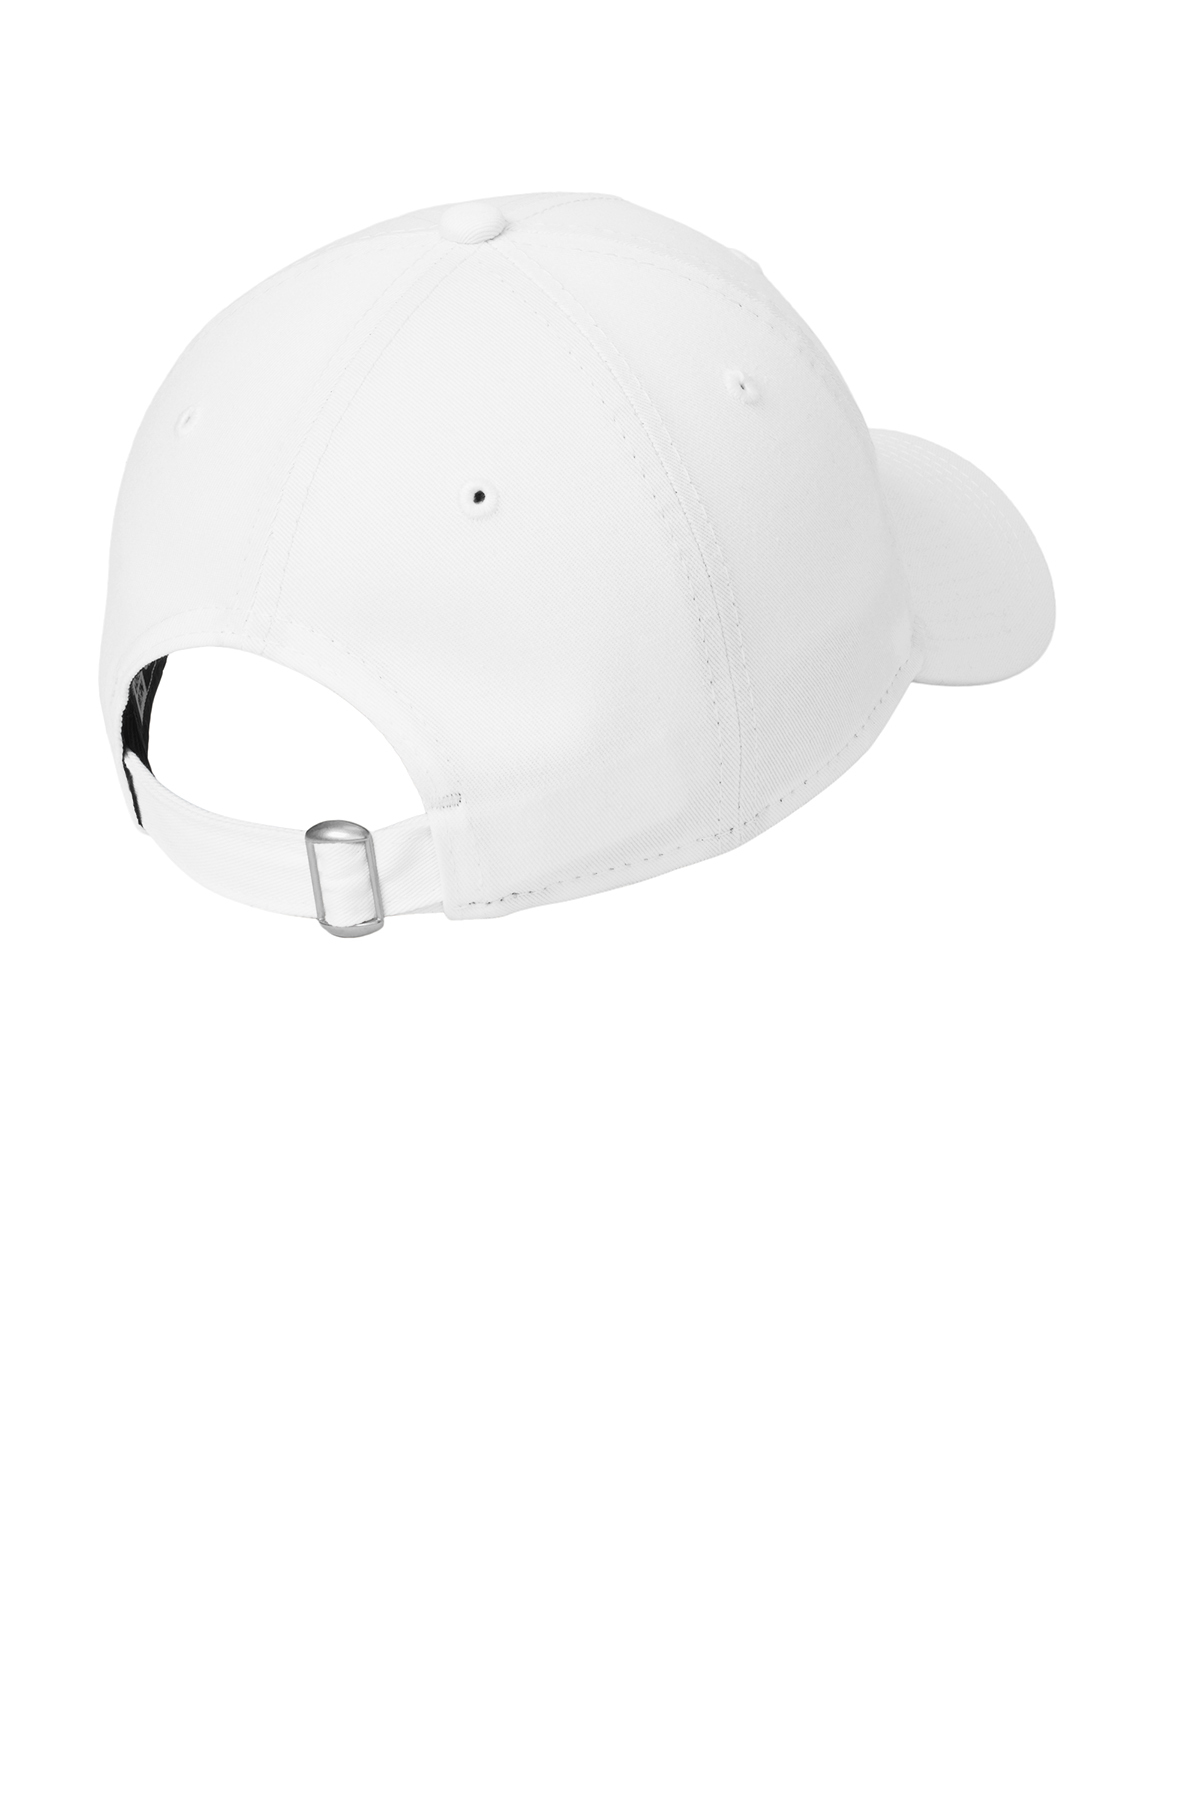 New Era - Adjustable Unstructured Cap | Product | Company Casuals